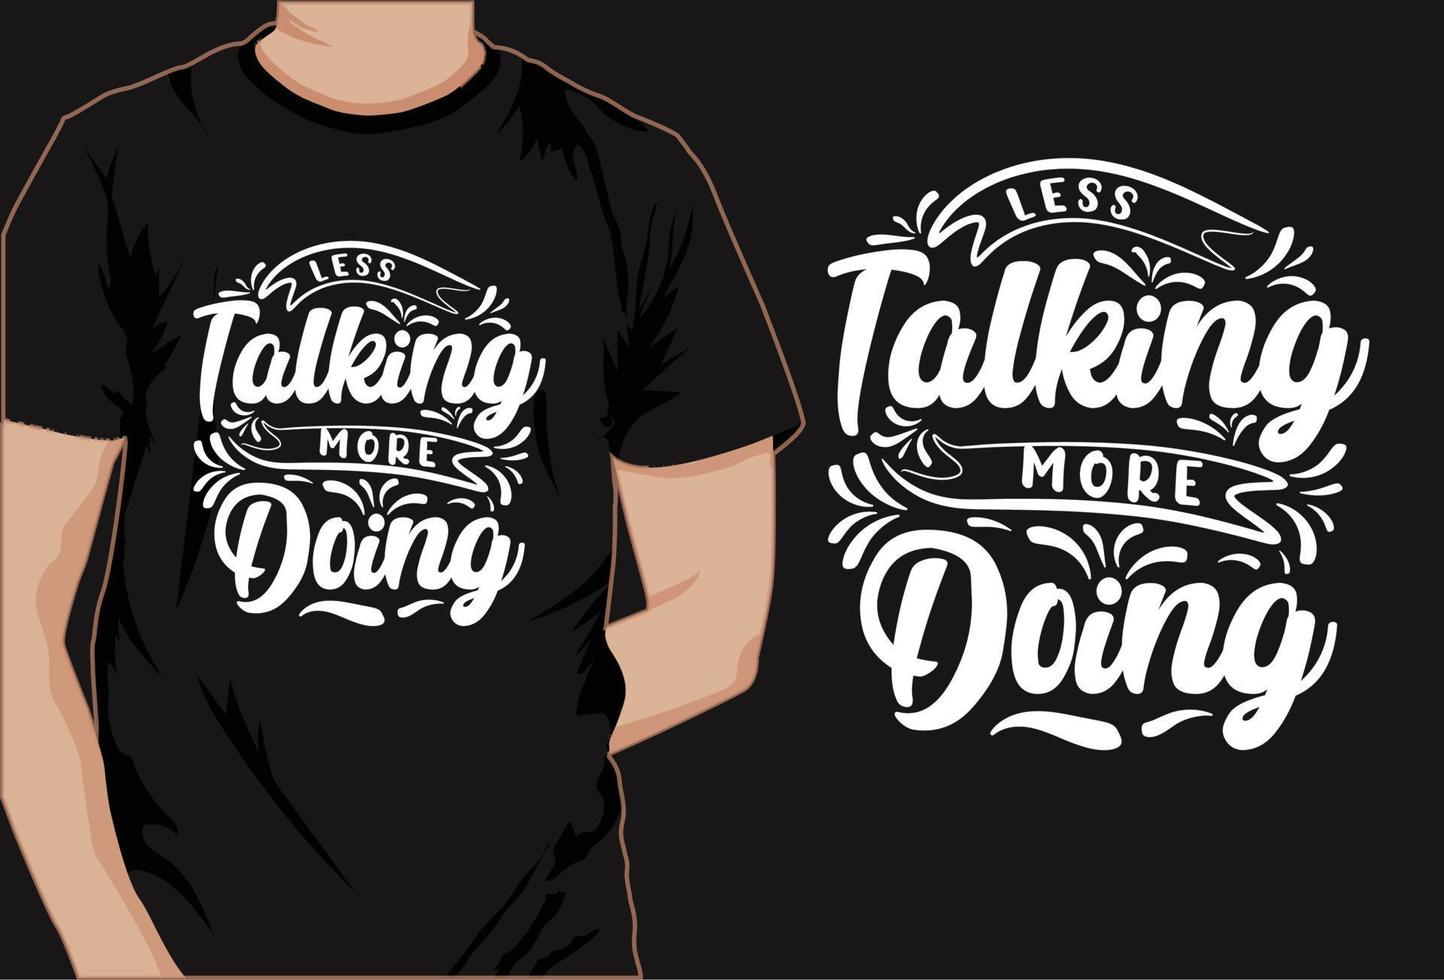 Motivational saying t shirt design, typography t shirt, decorative t shirt vector